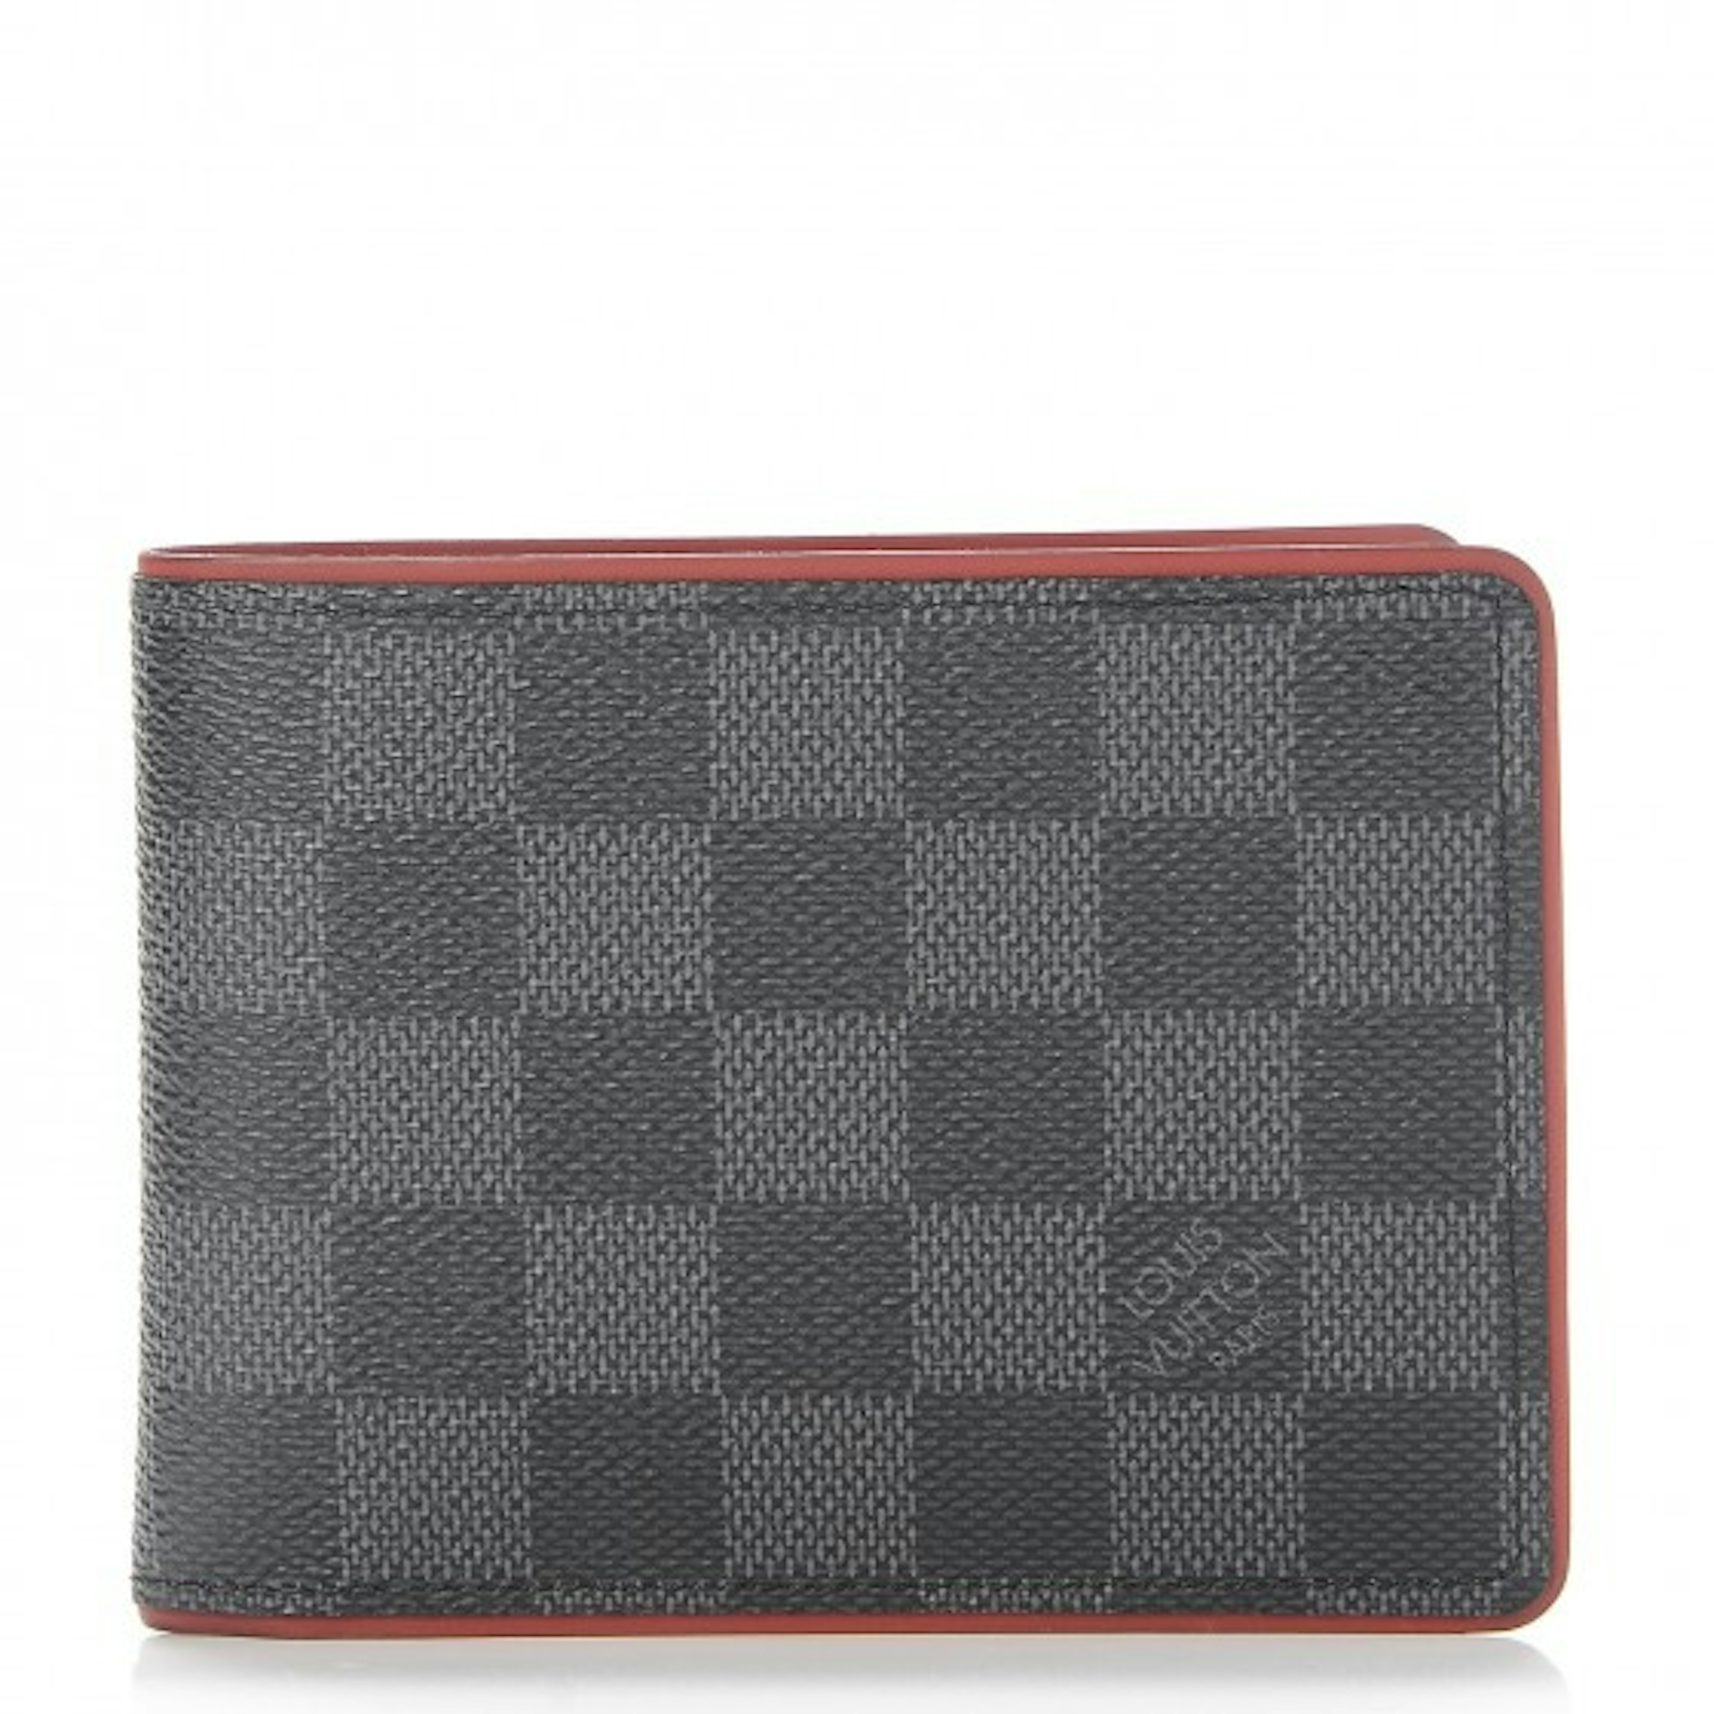 Louis Vuitton Multiple Wallet Damier Graphite Black/Red in Canvas - GB